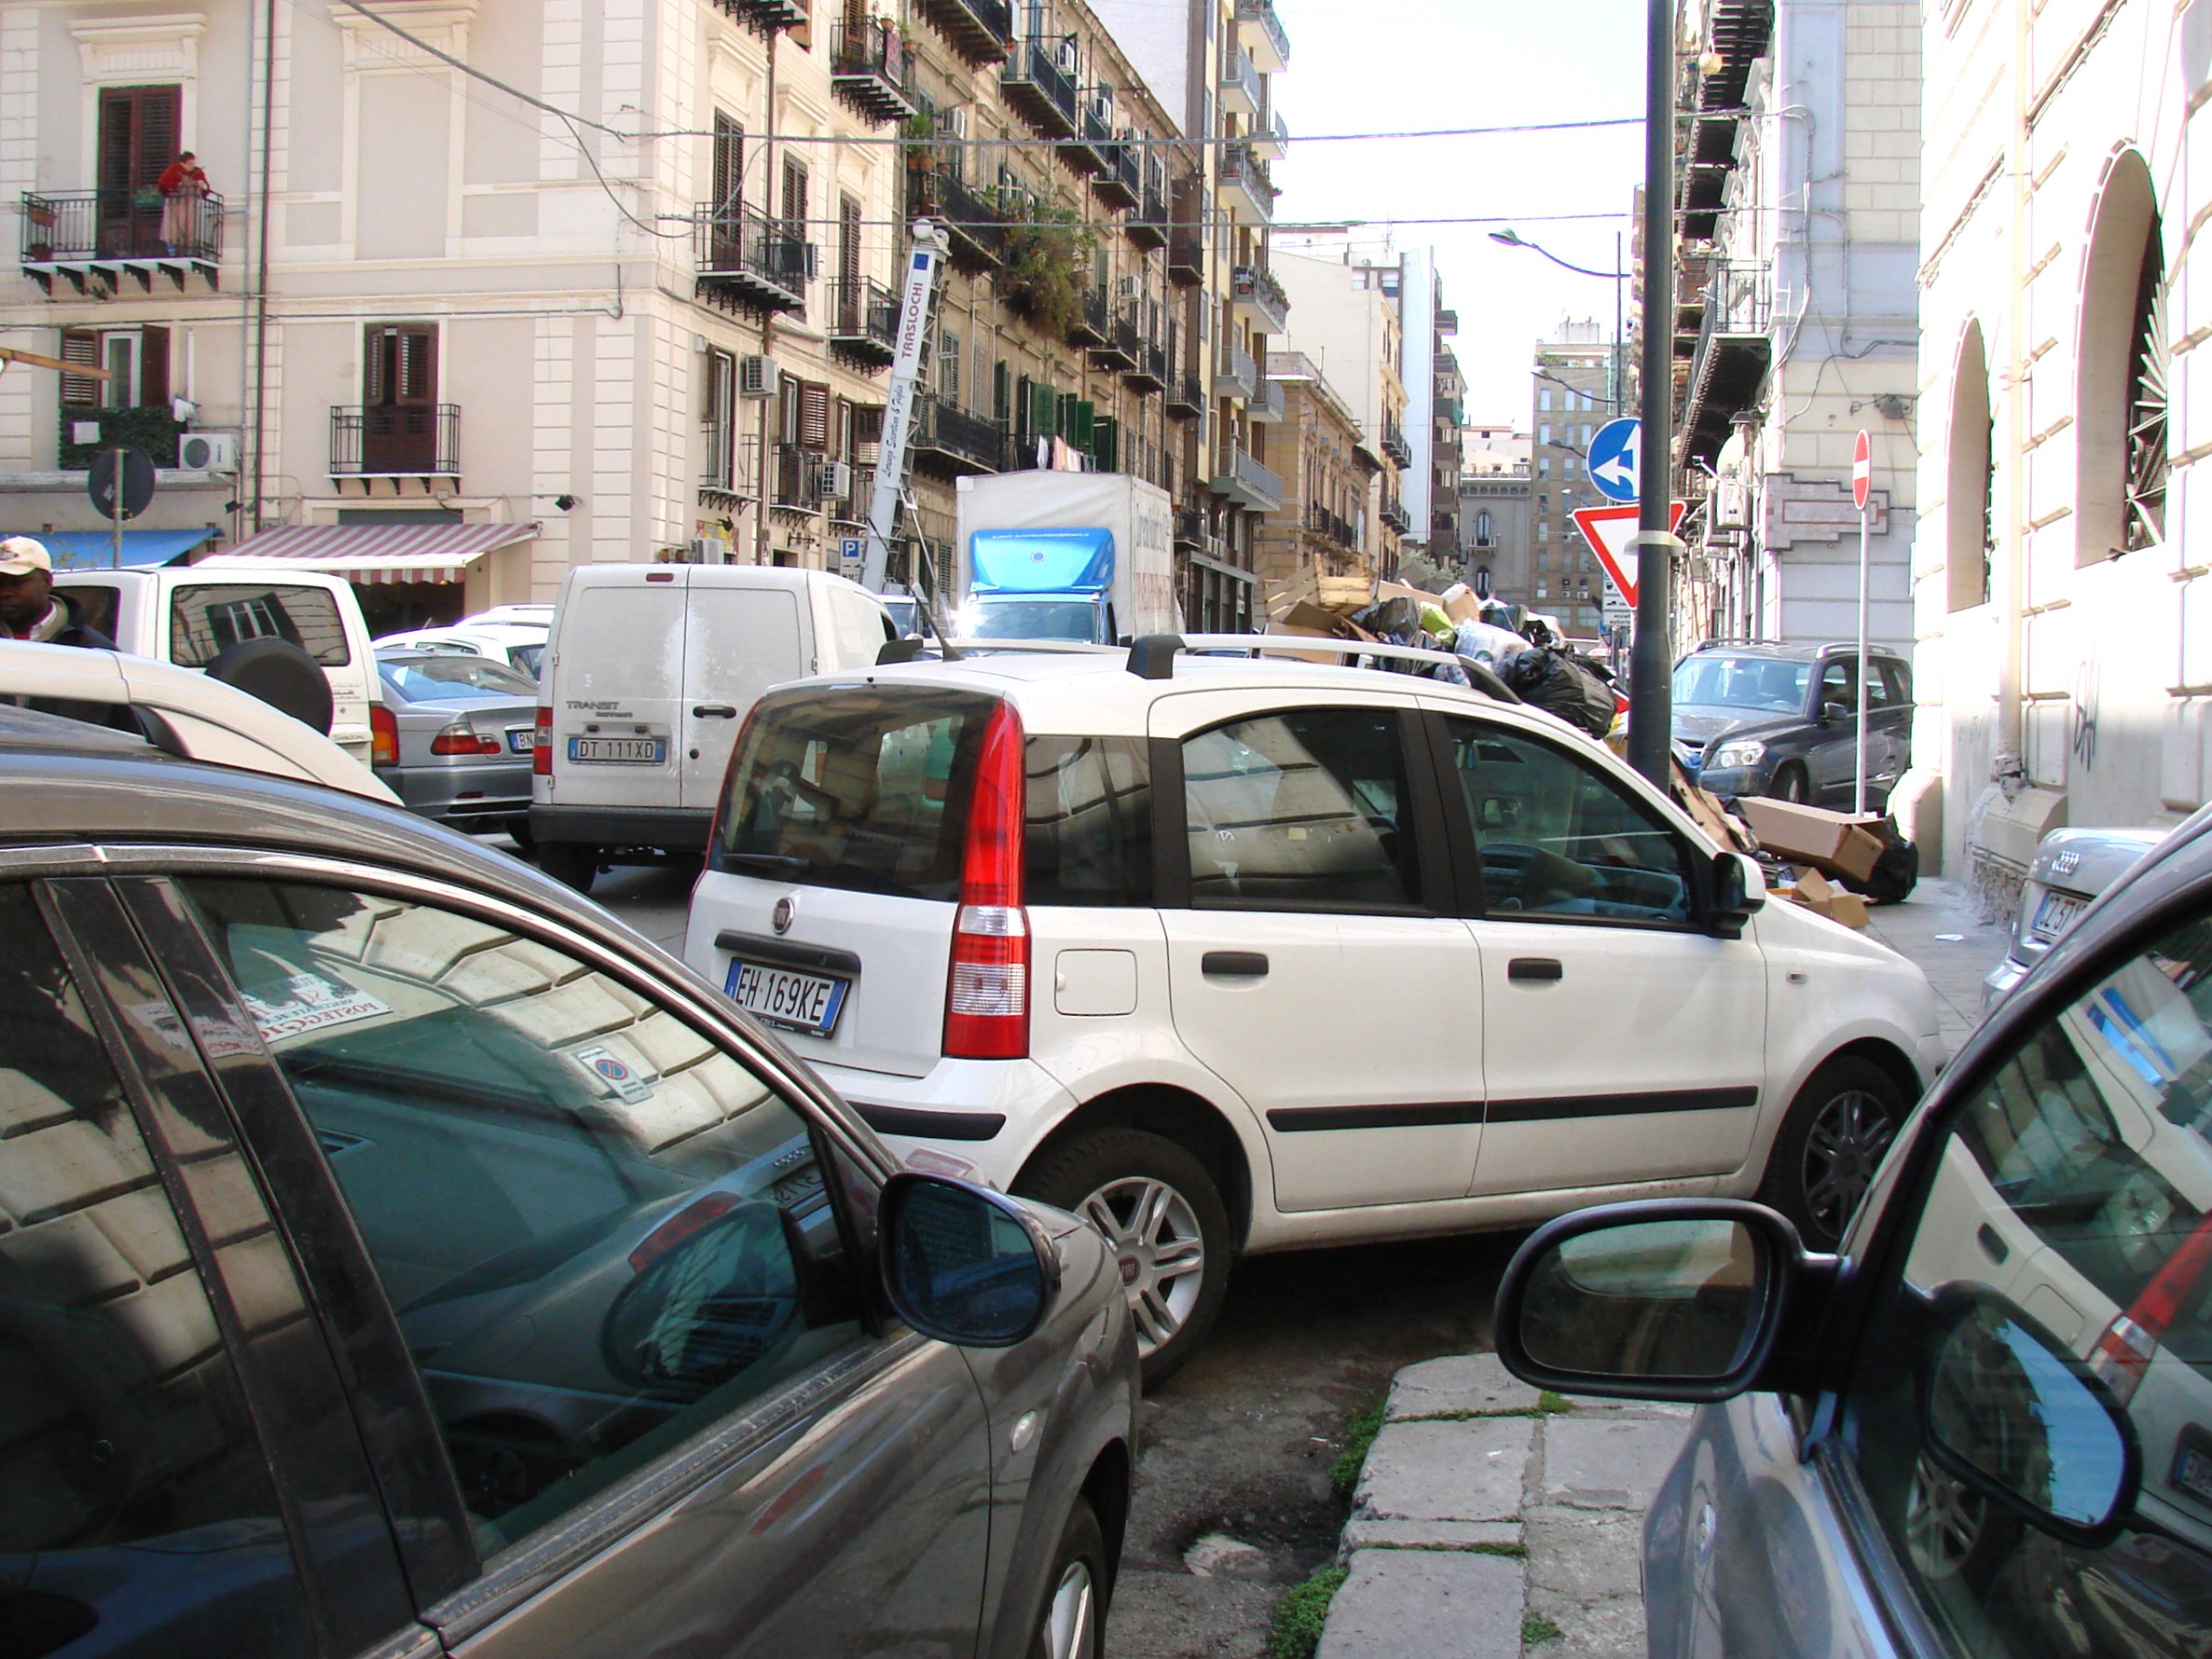 Smart Parking Reduces Pollution